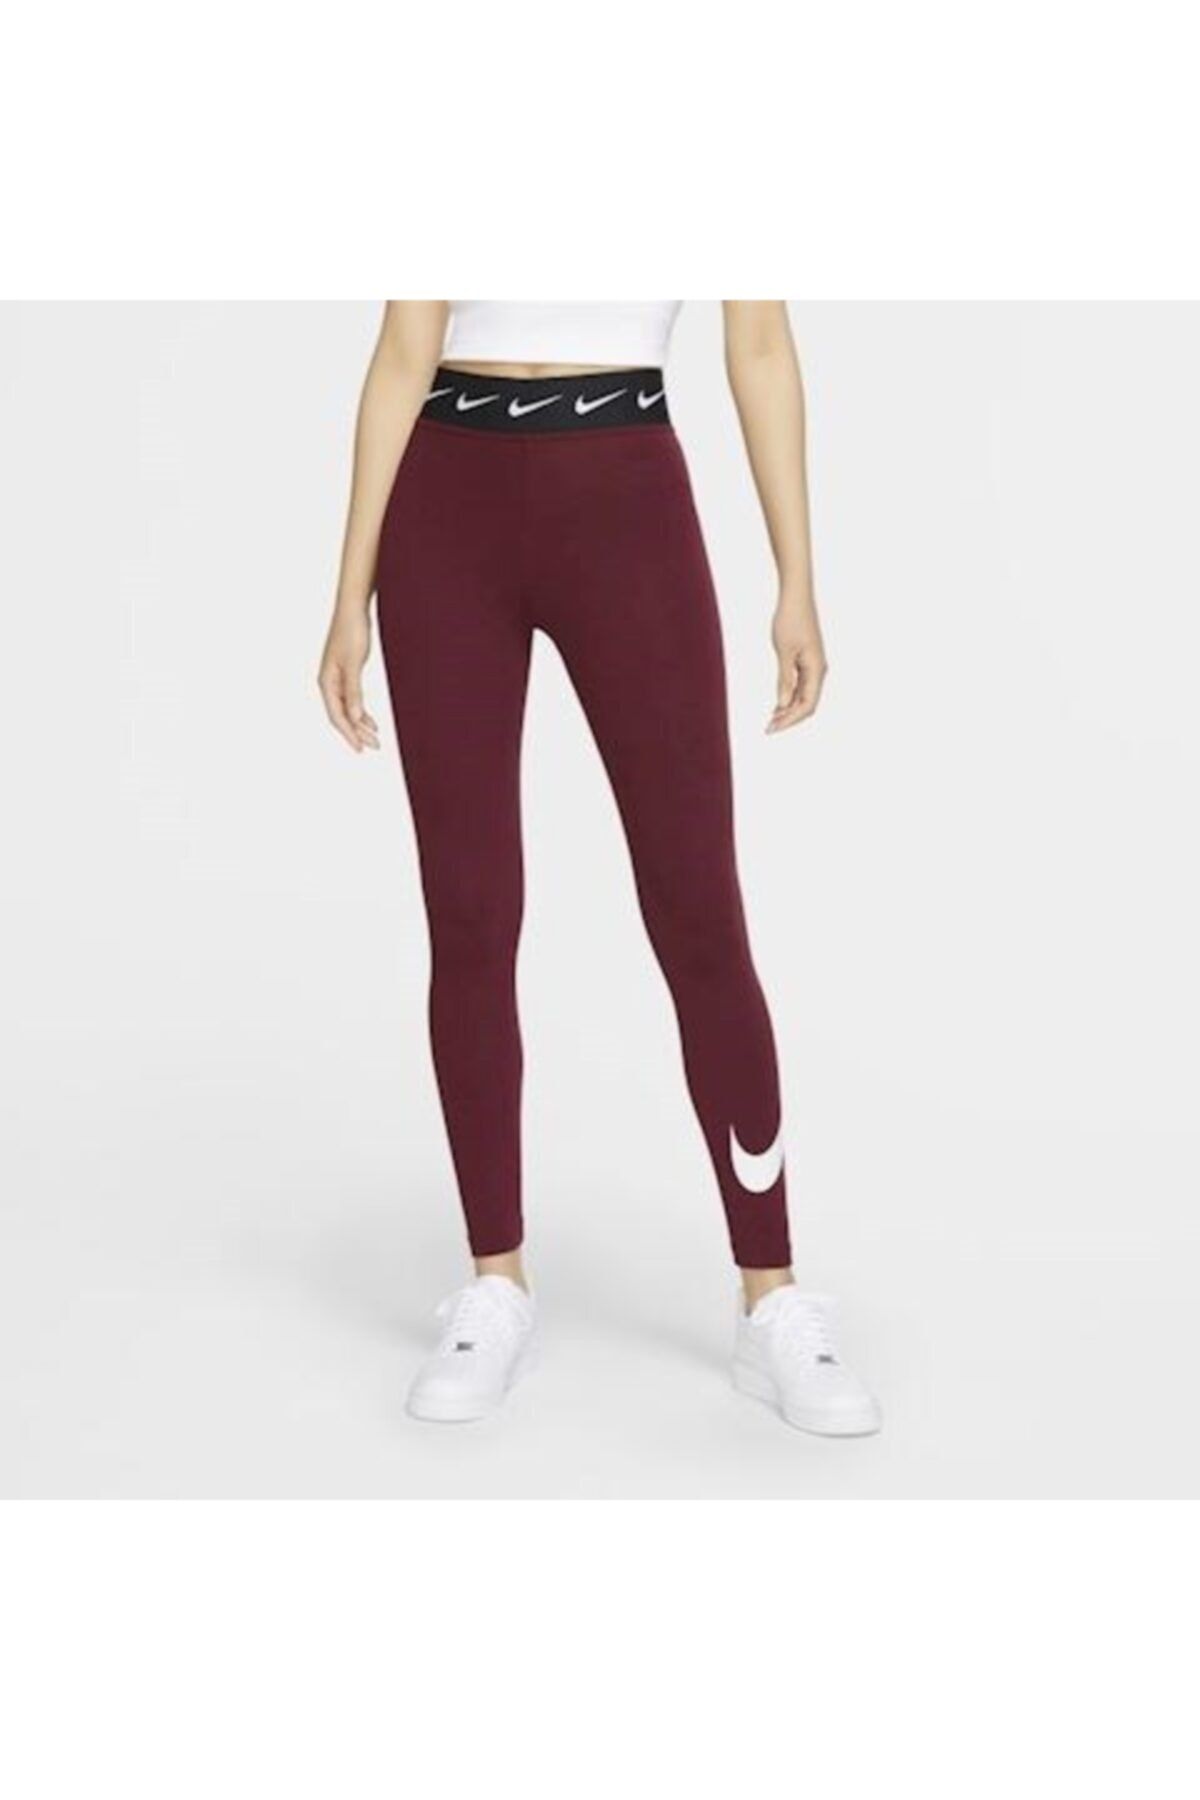 Nike Sportswear Club Women's High-waisted Leggings - Red Cj1984-638